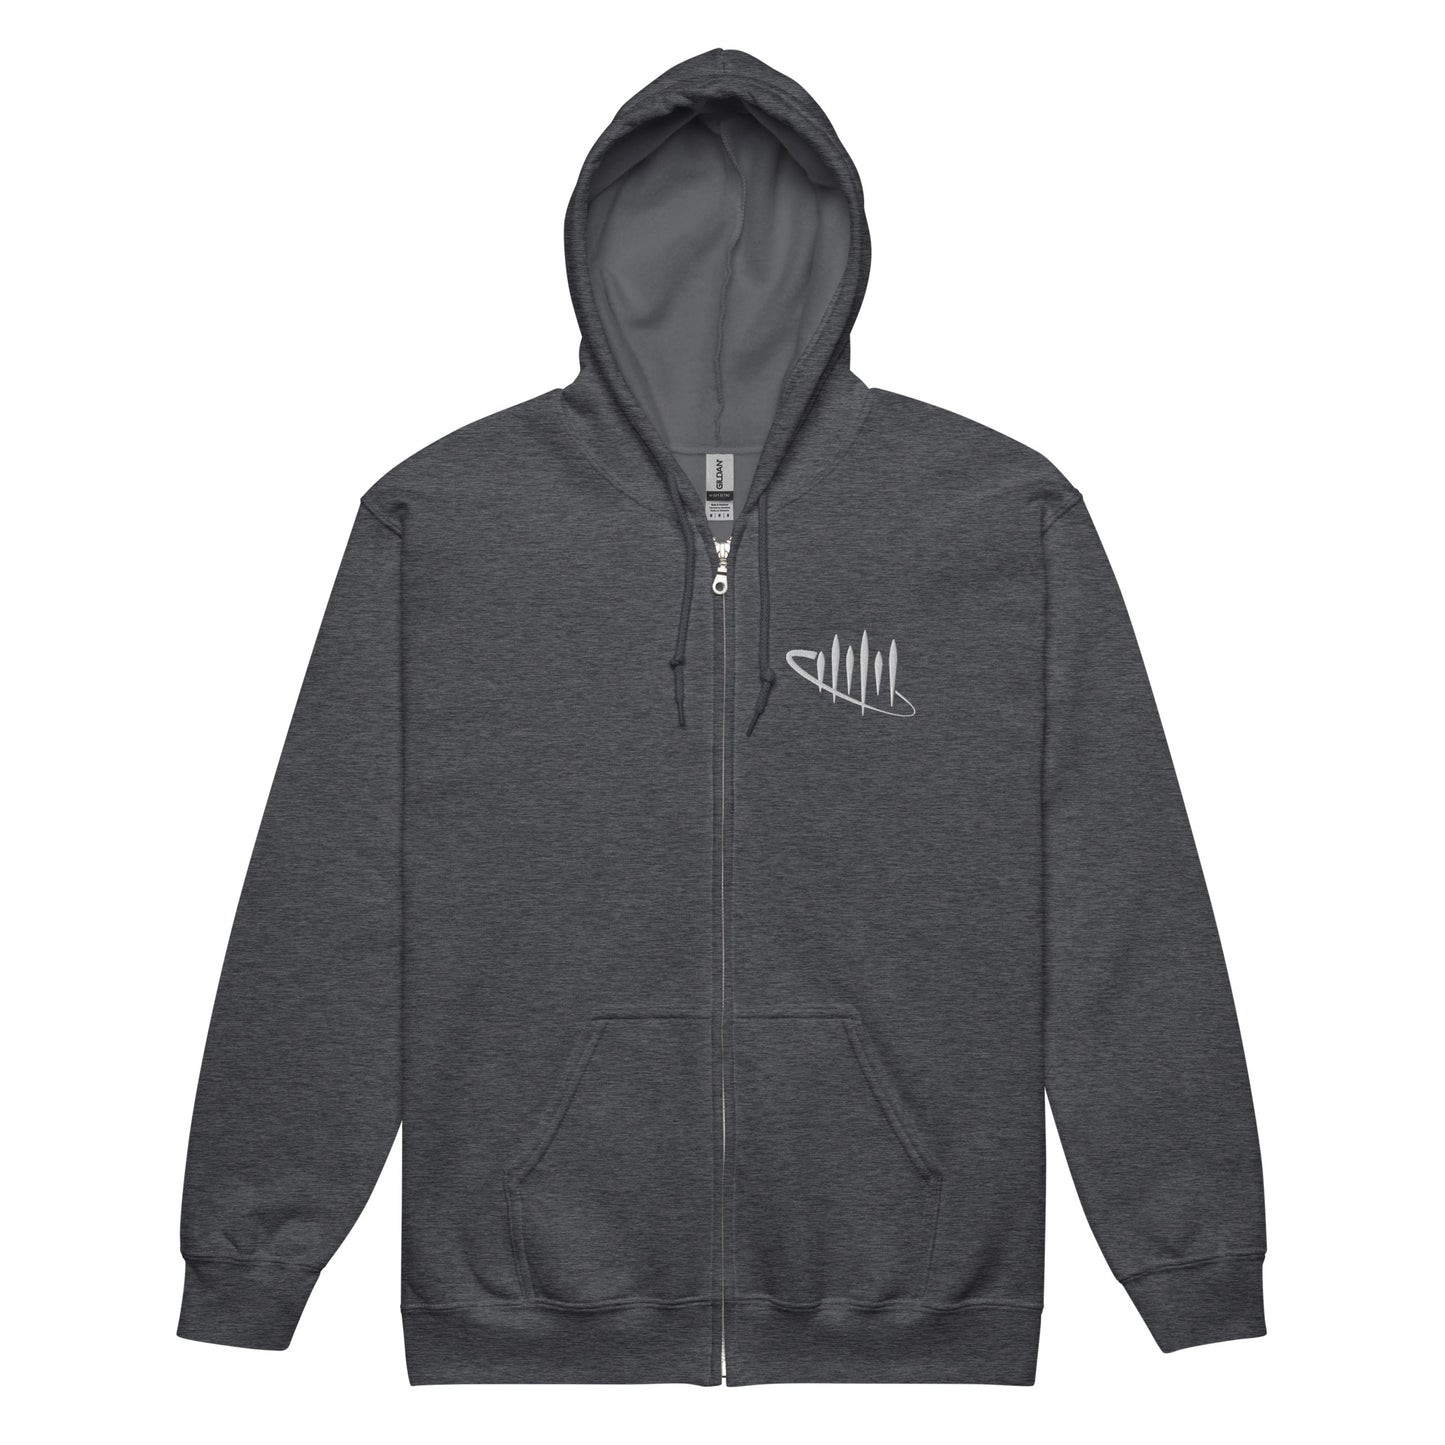 Sky Elements Logo Embroidered Unisex zip hoodie